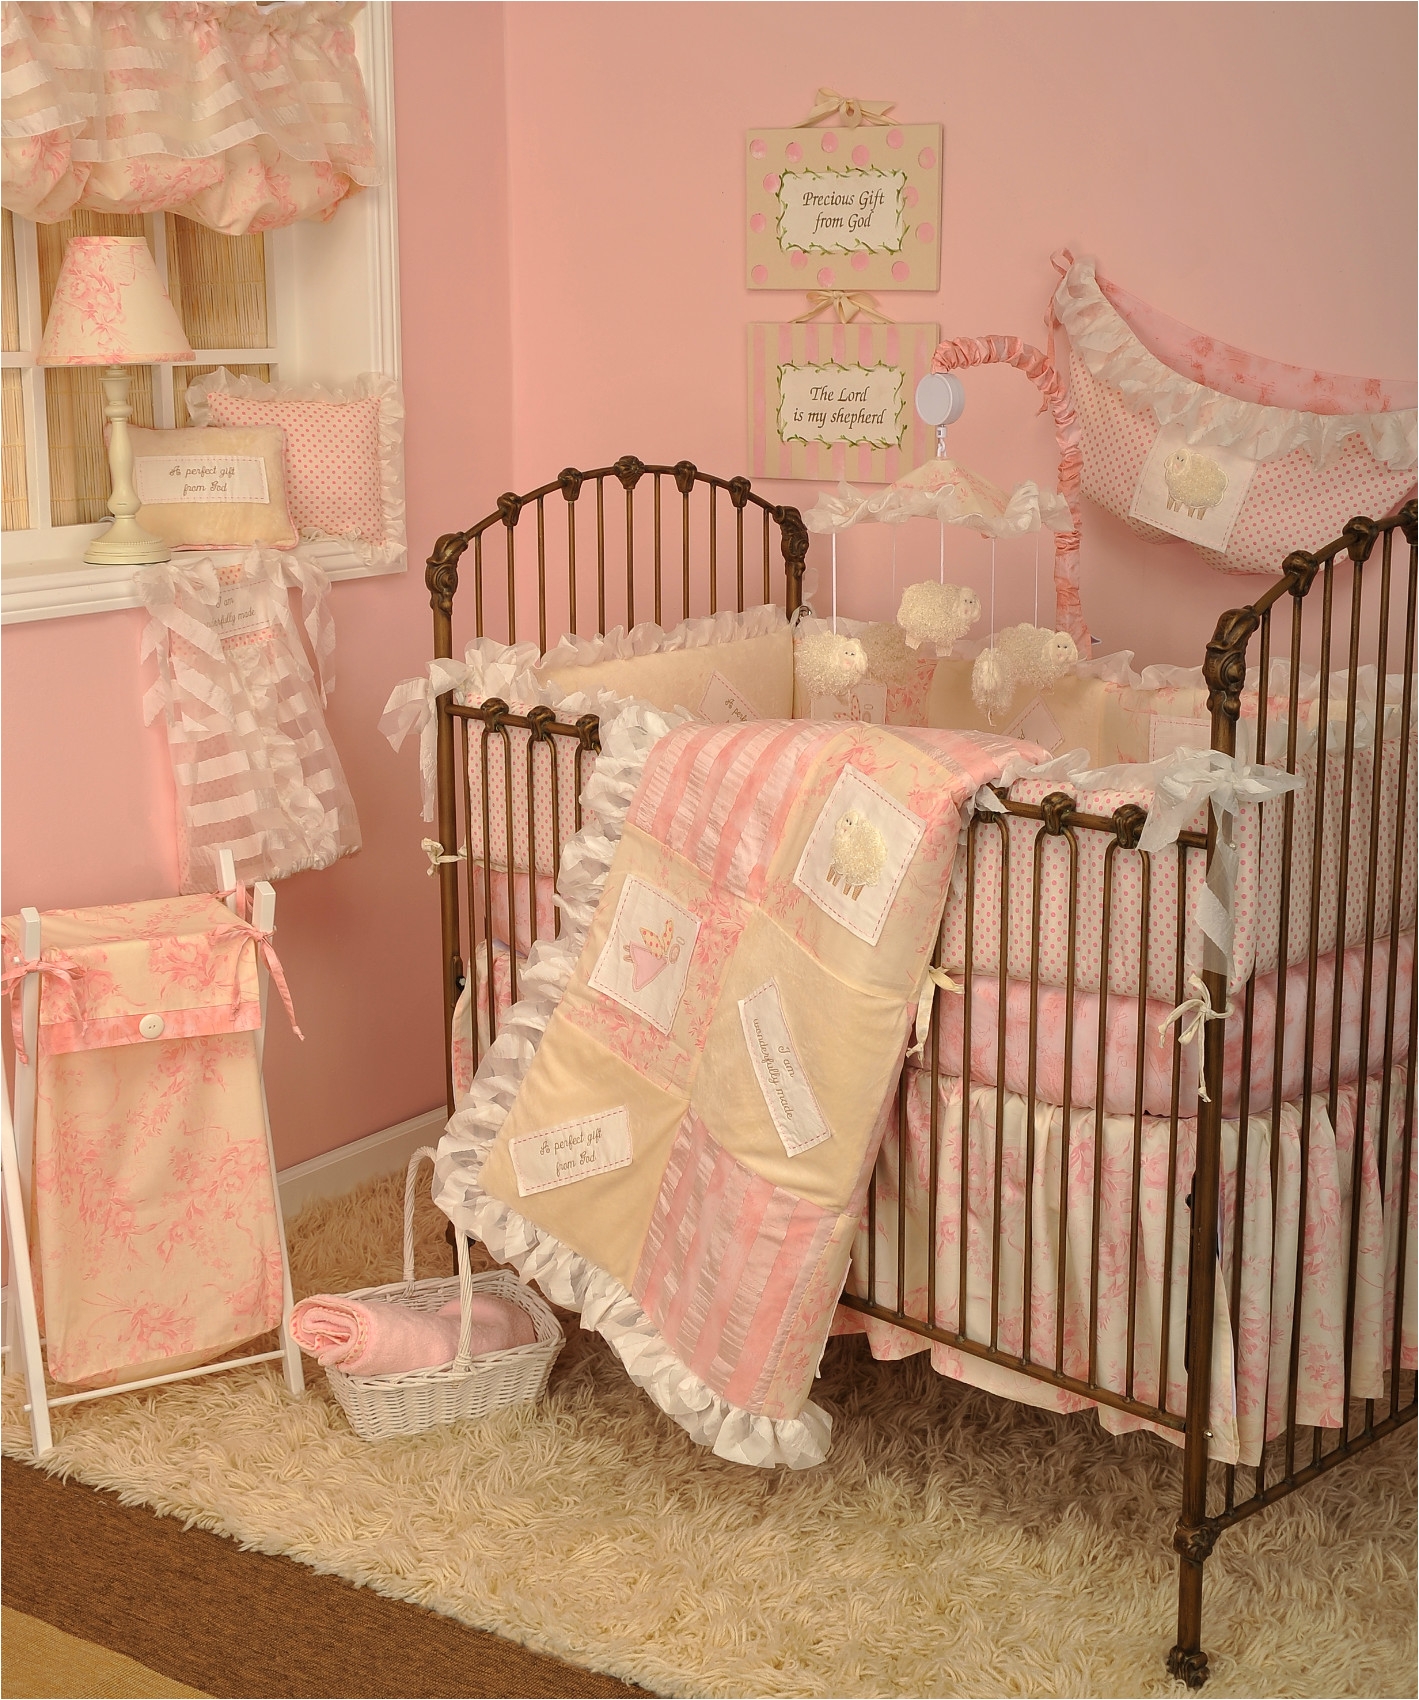 crib mattress burlington coat factory awesome bedroom elegant about baby girl bedding sets pinterest